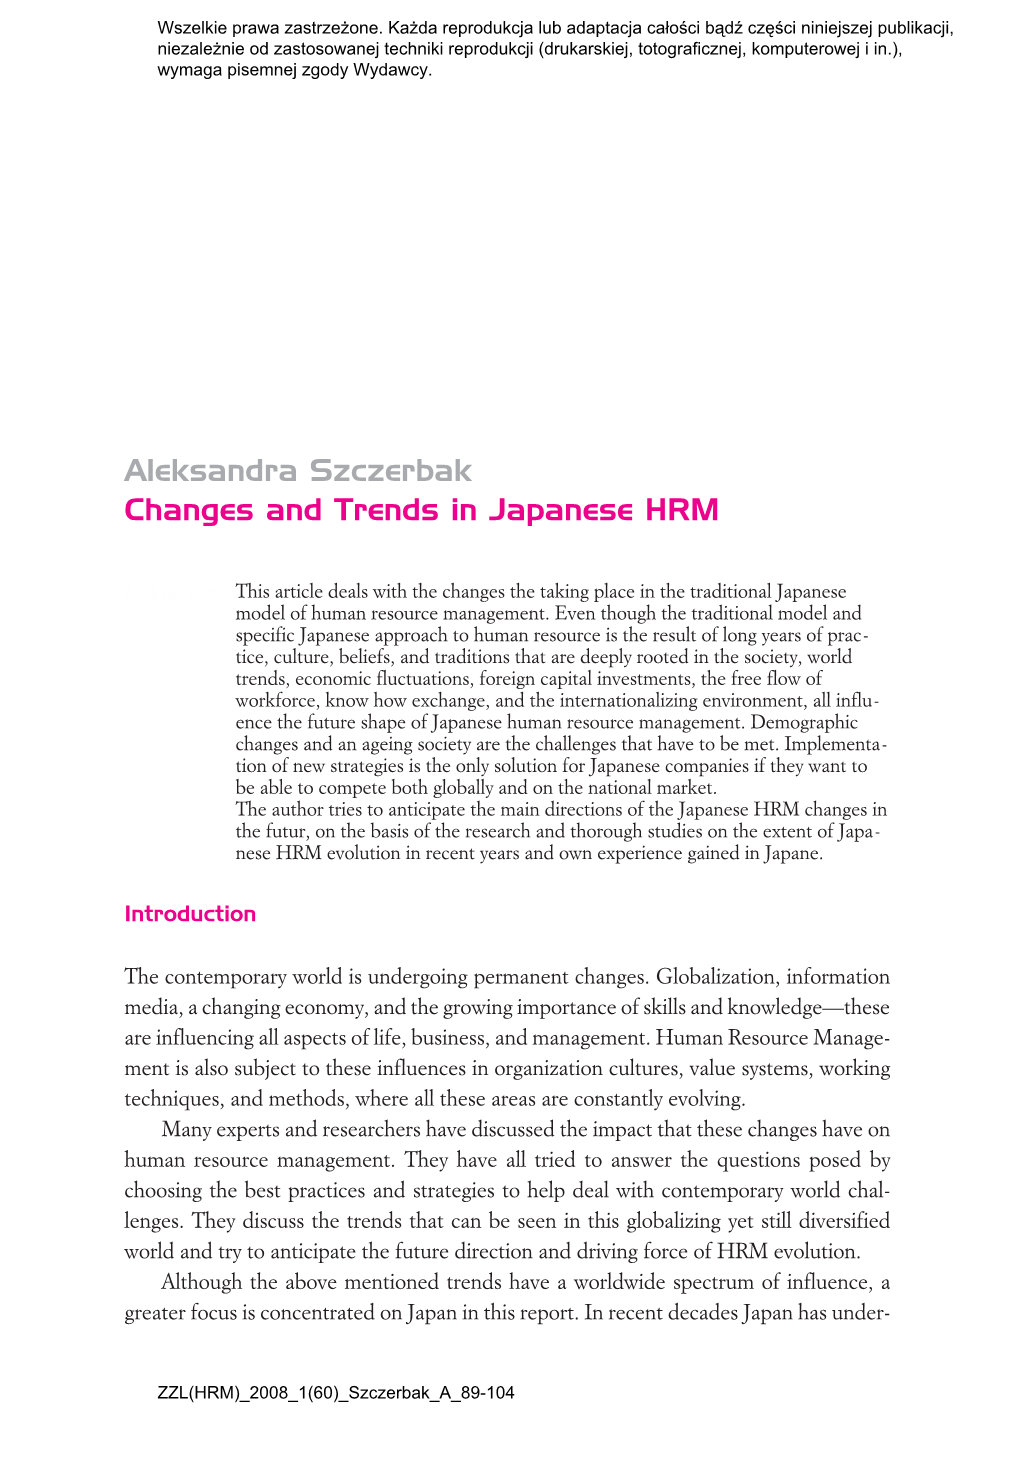 Aleksandra Szczerbak Changes and Trends in Japanese HRM